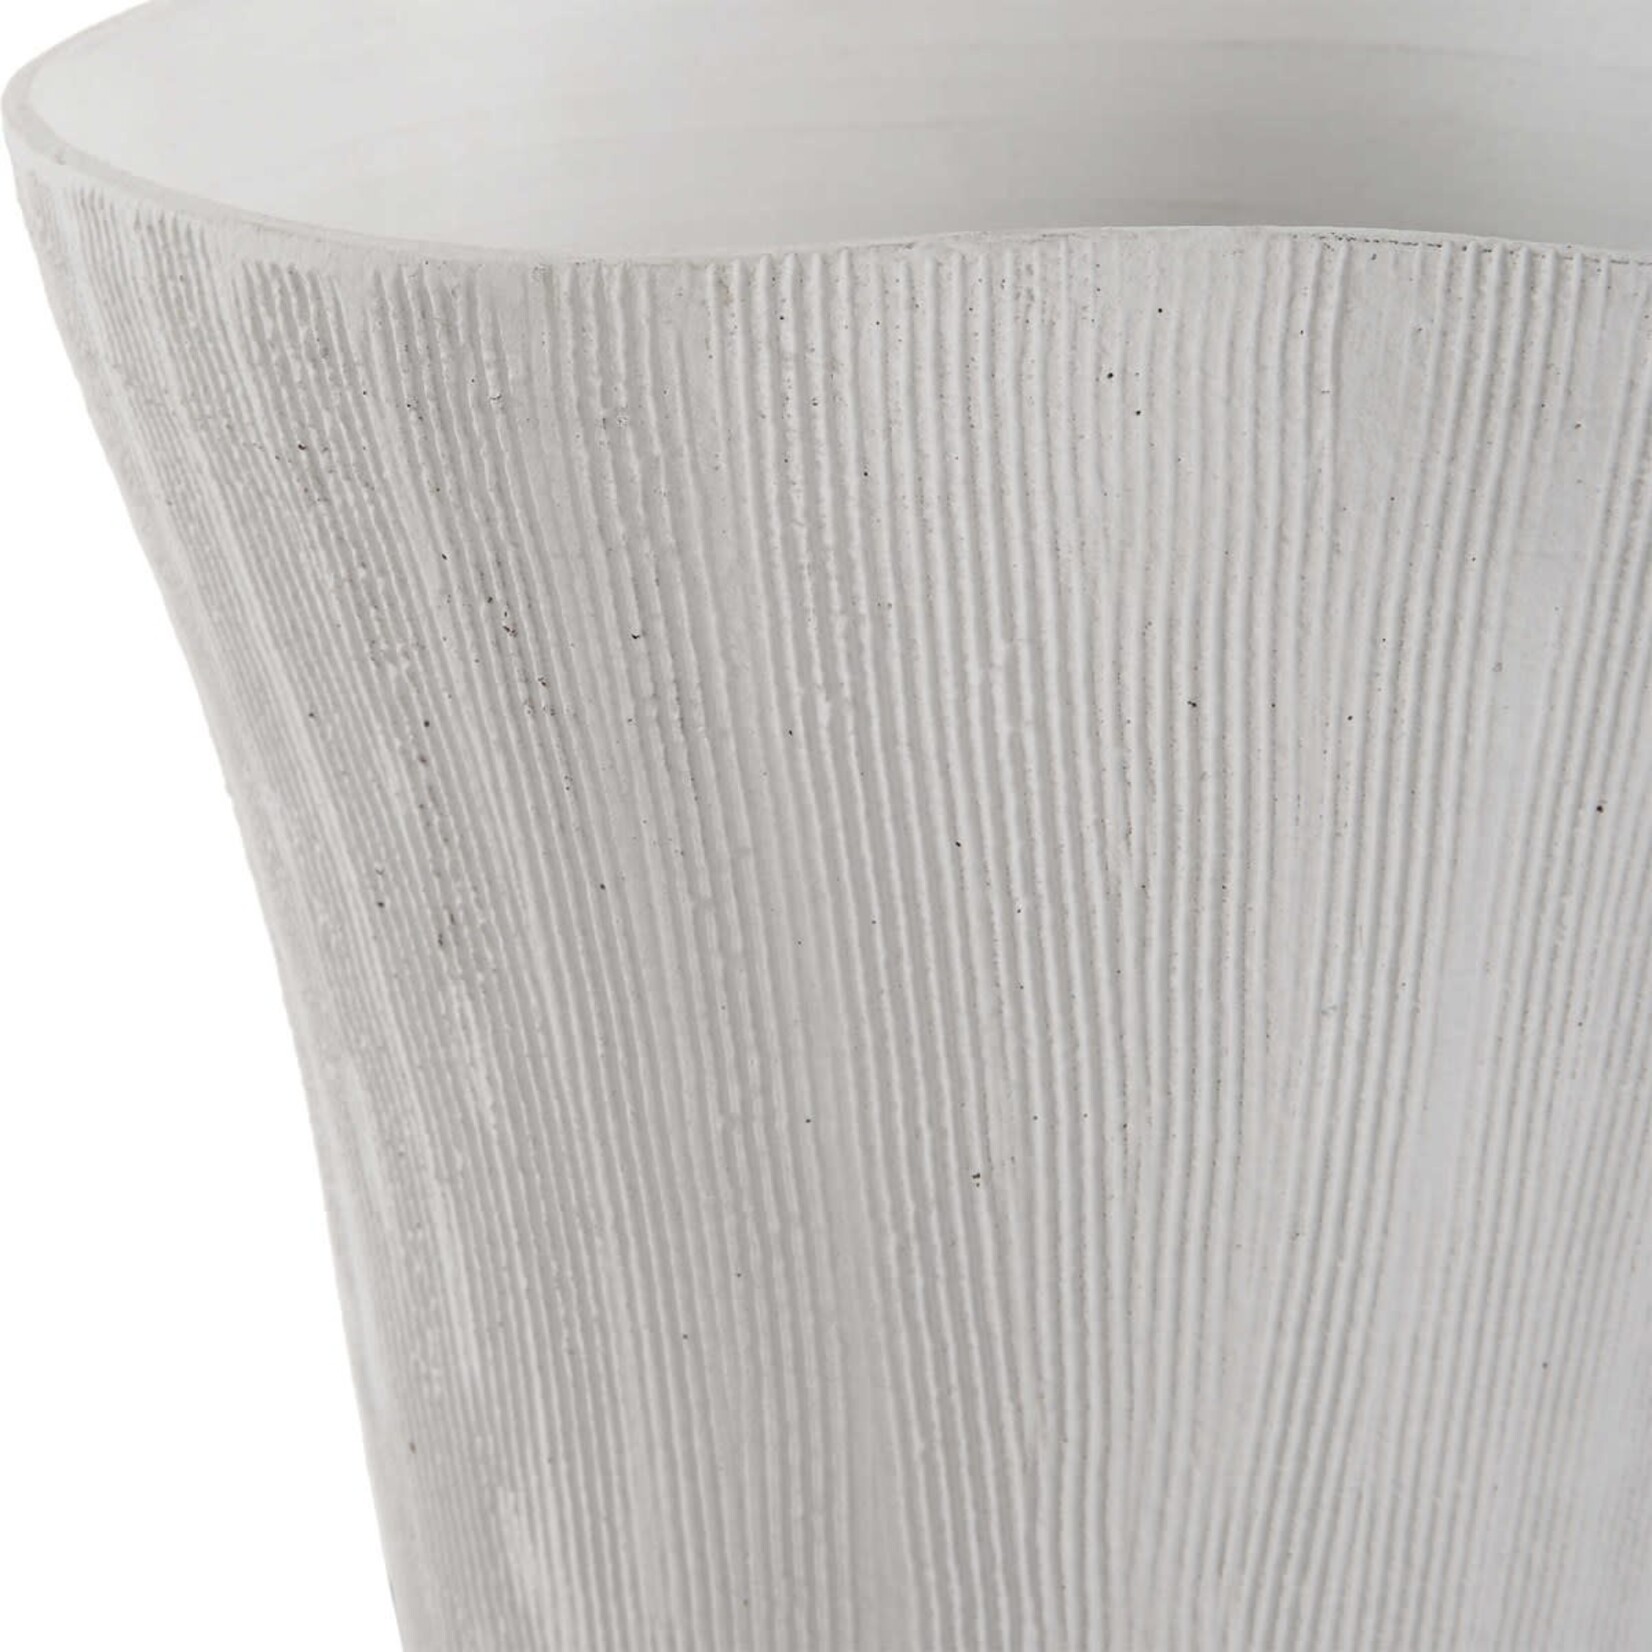 Outside The Box 16" Floreana White Etched Surface Ceramic Vase